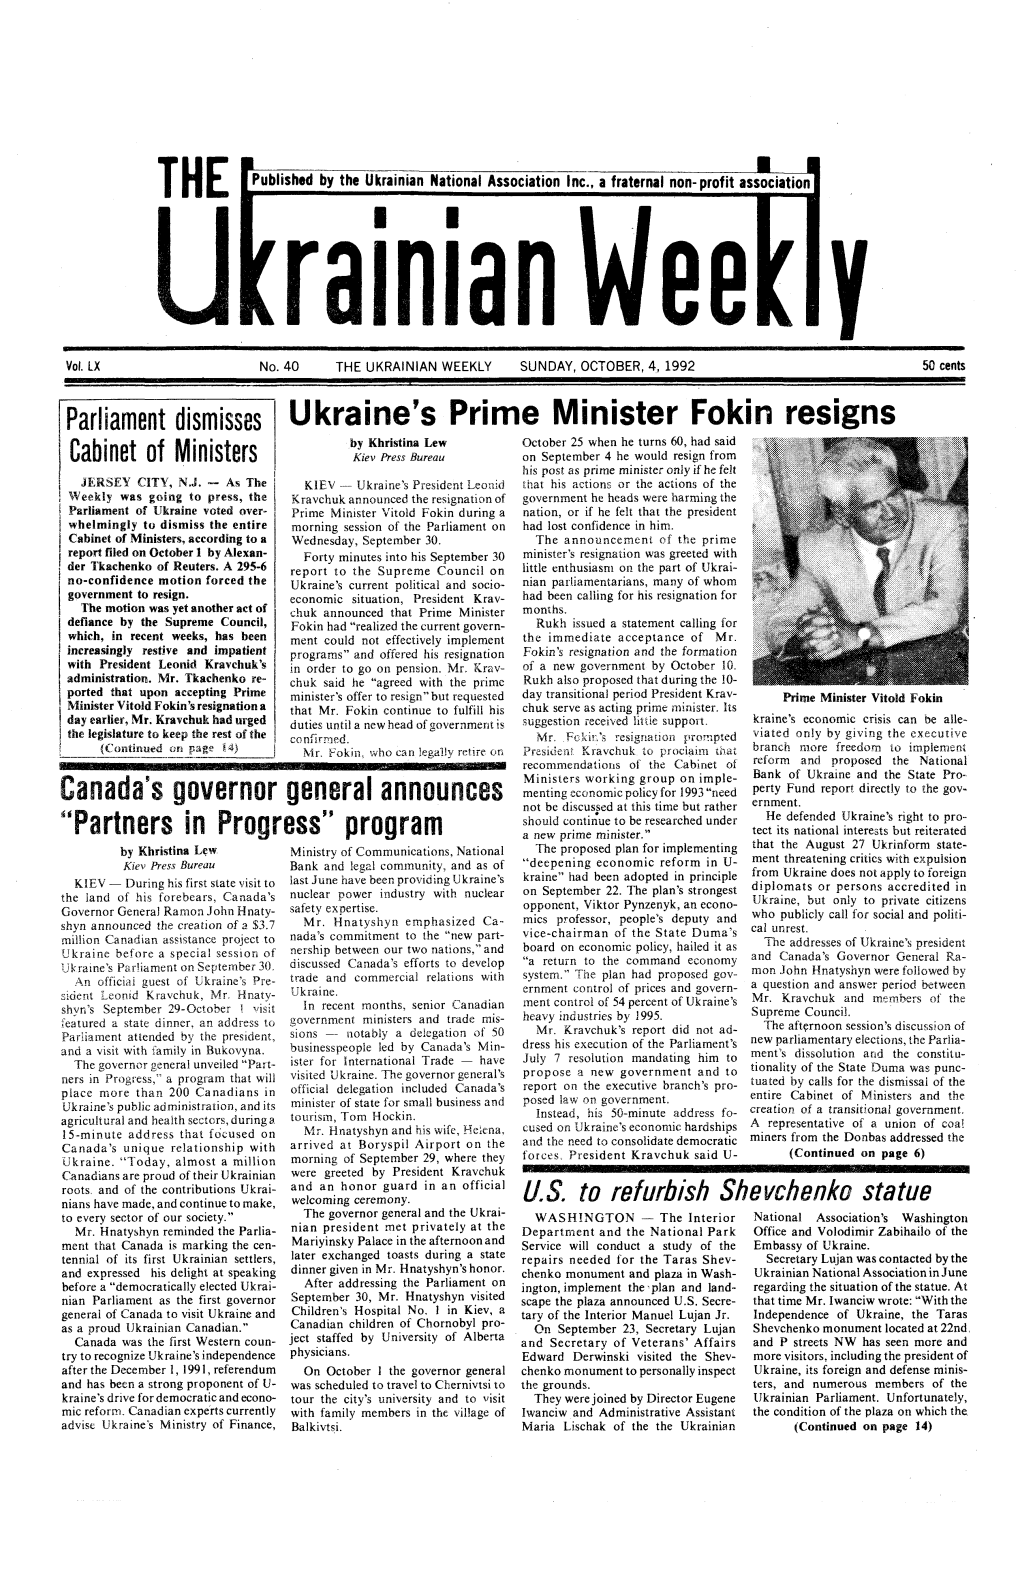 The Ukrainian Weekly 1992, No.40